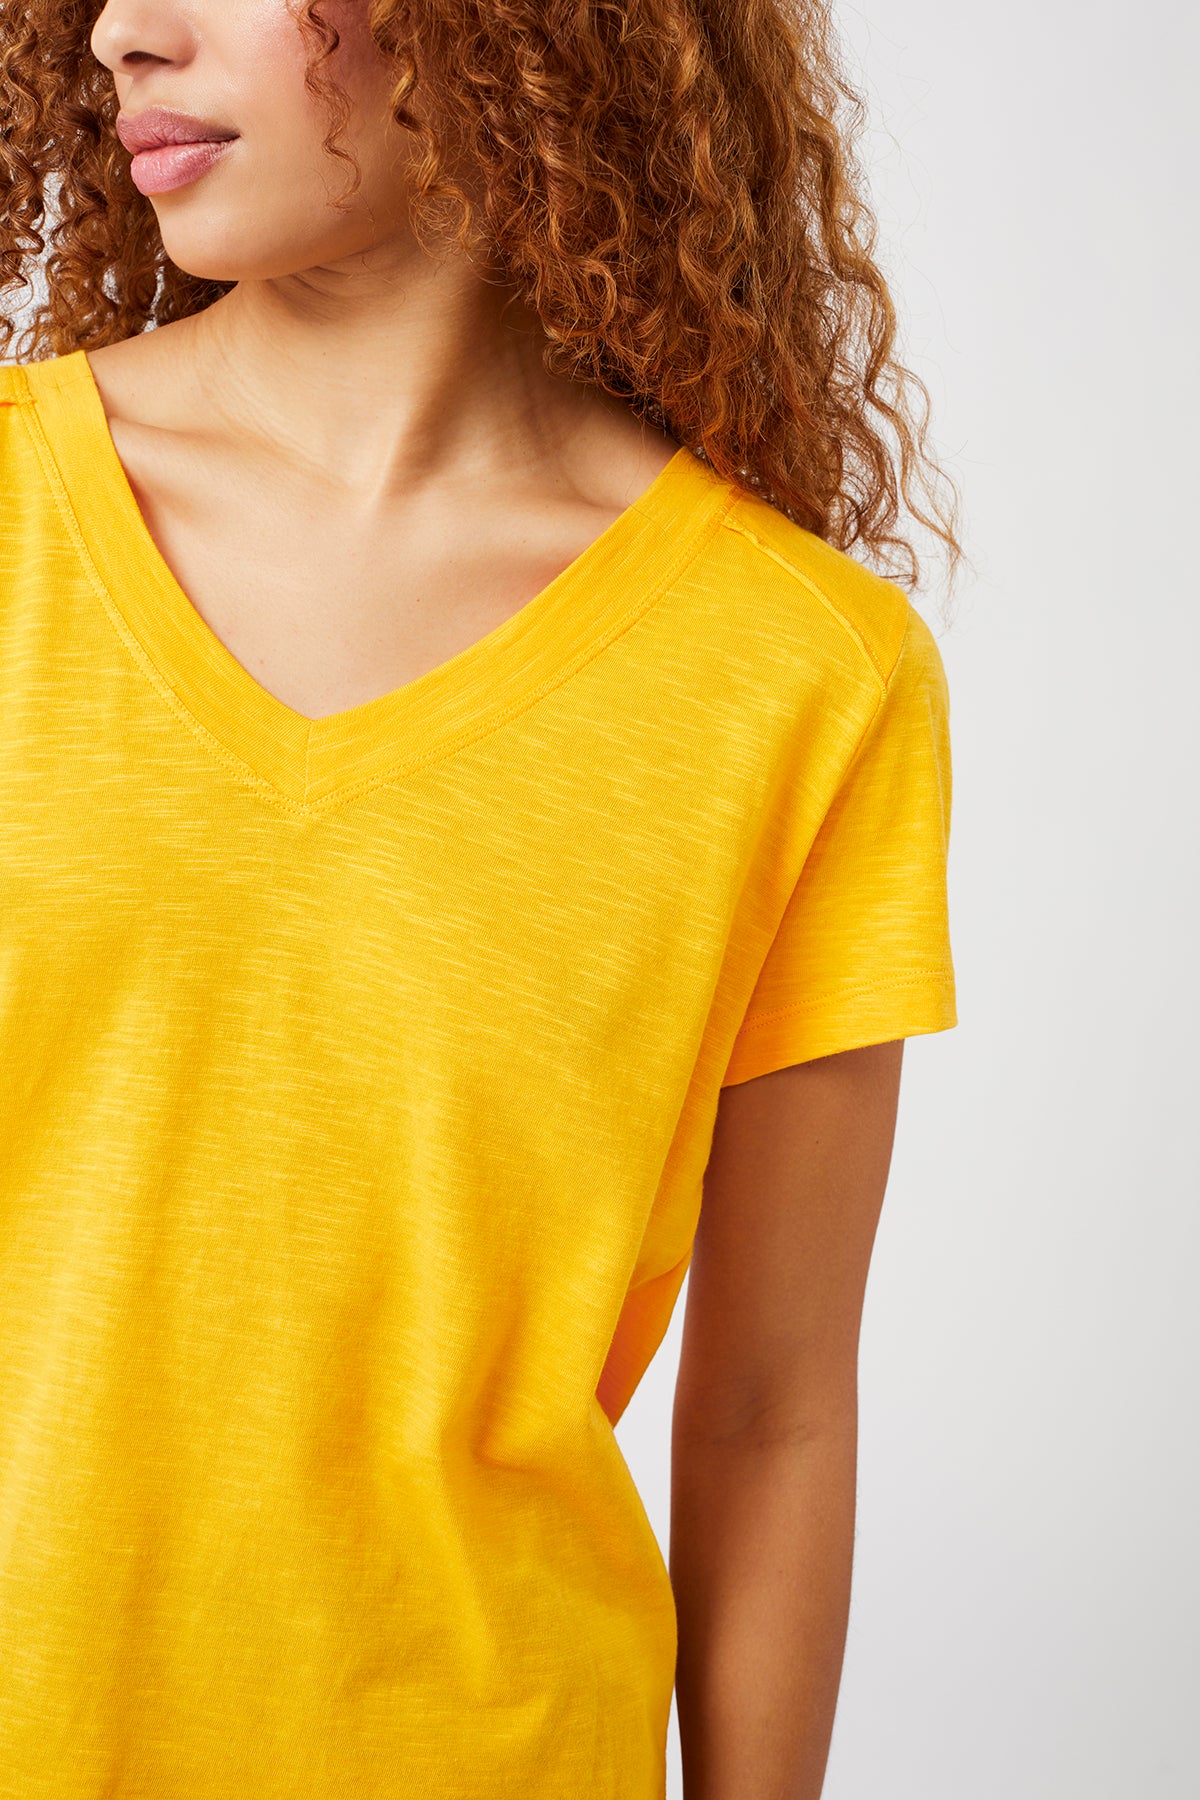 Mandala Yoga Shirt Gelb Detail - The New V-Neck